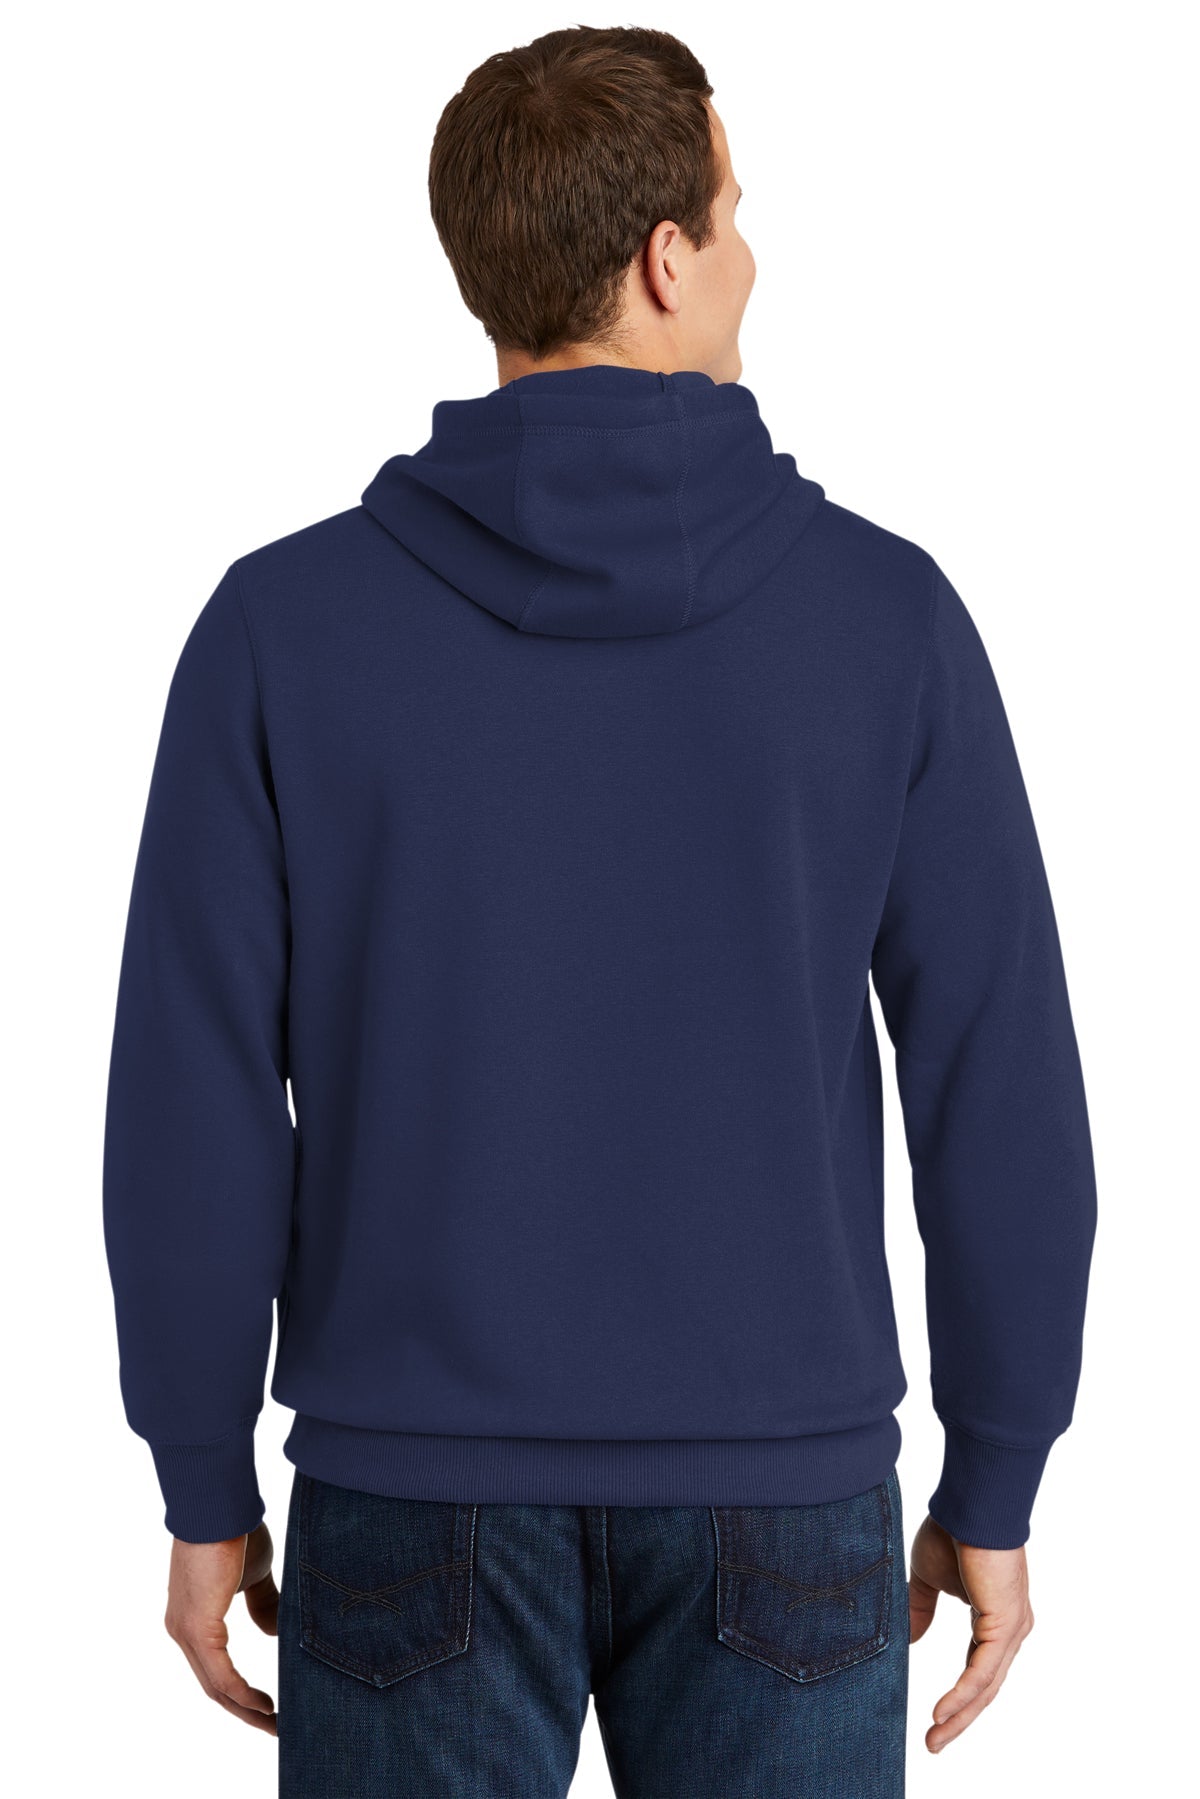 sport-tek_st254 _true navy_company_logo_sweatshirts